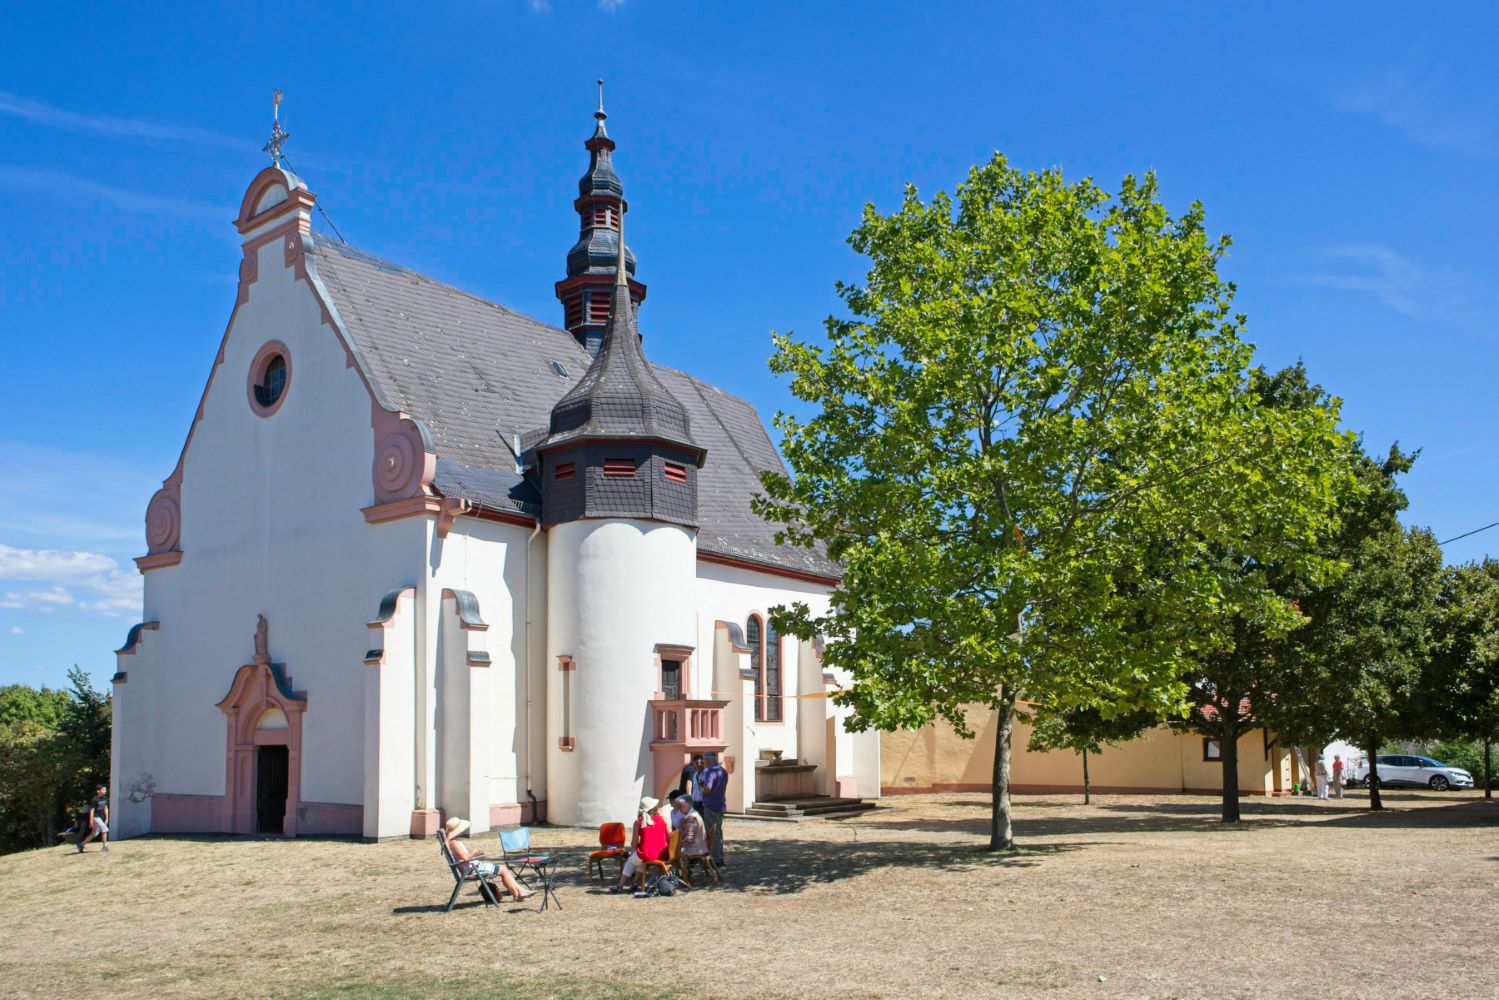 St. Laurenzikapelle (Laurenziberg, Gau-Algesheim)